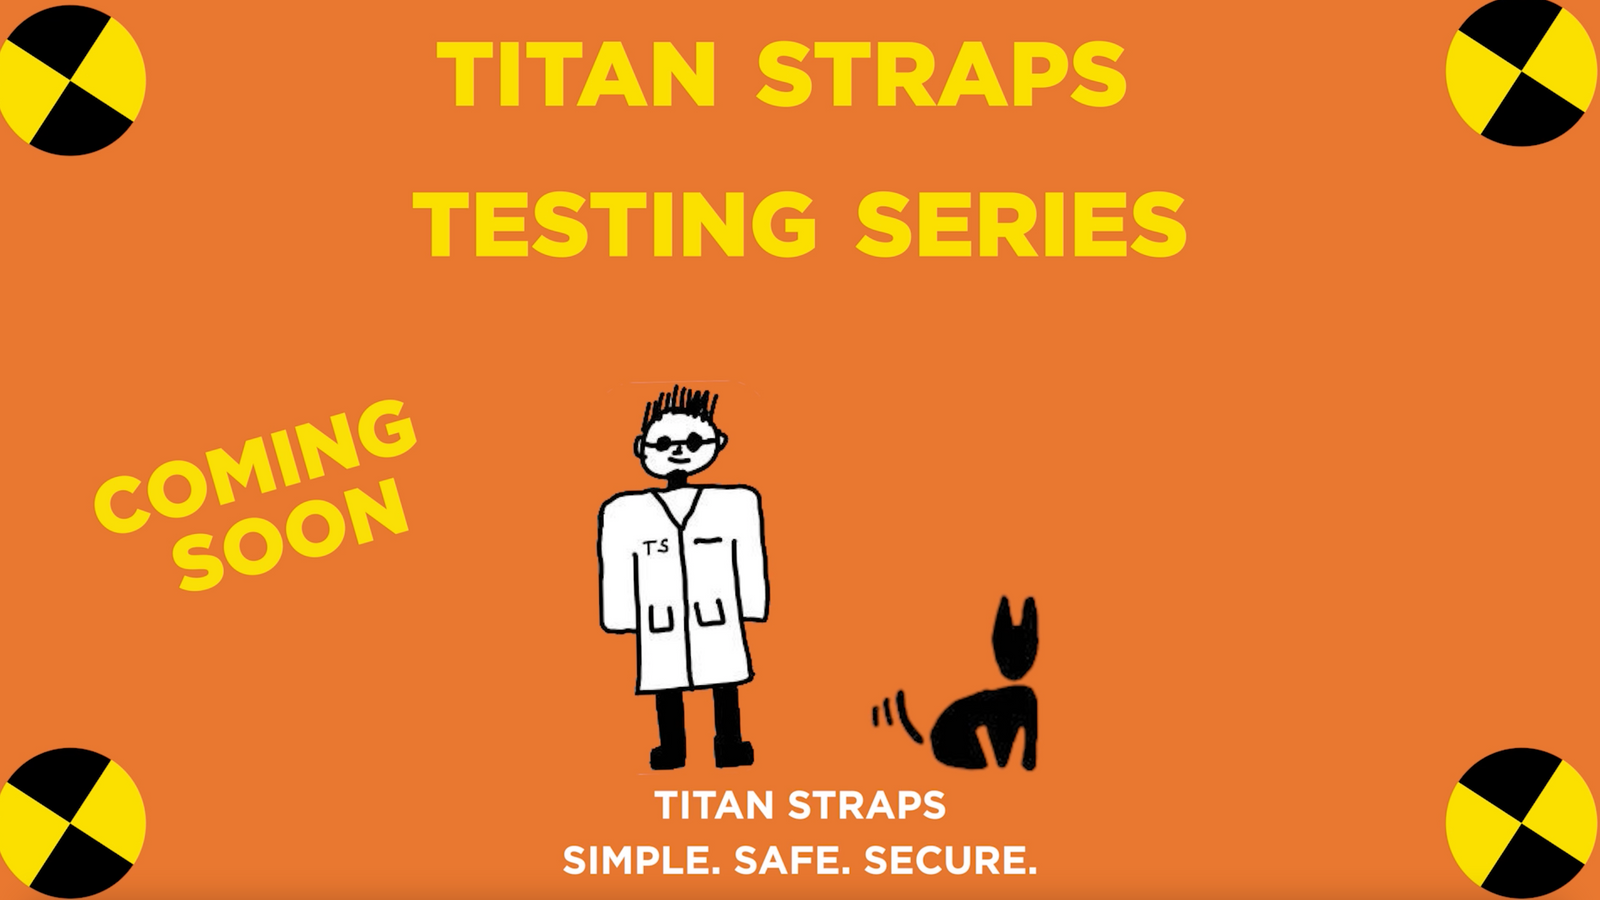 Introducing the Titan Straps Testing Series